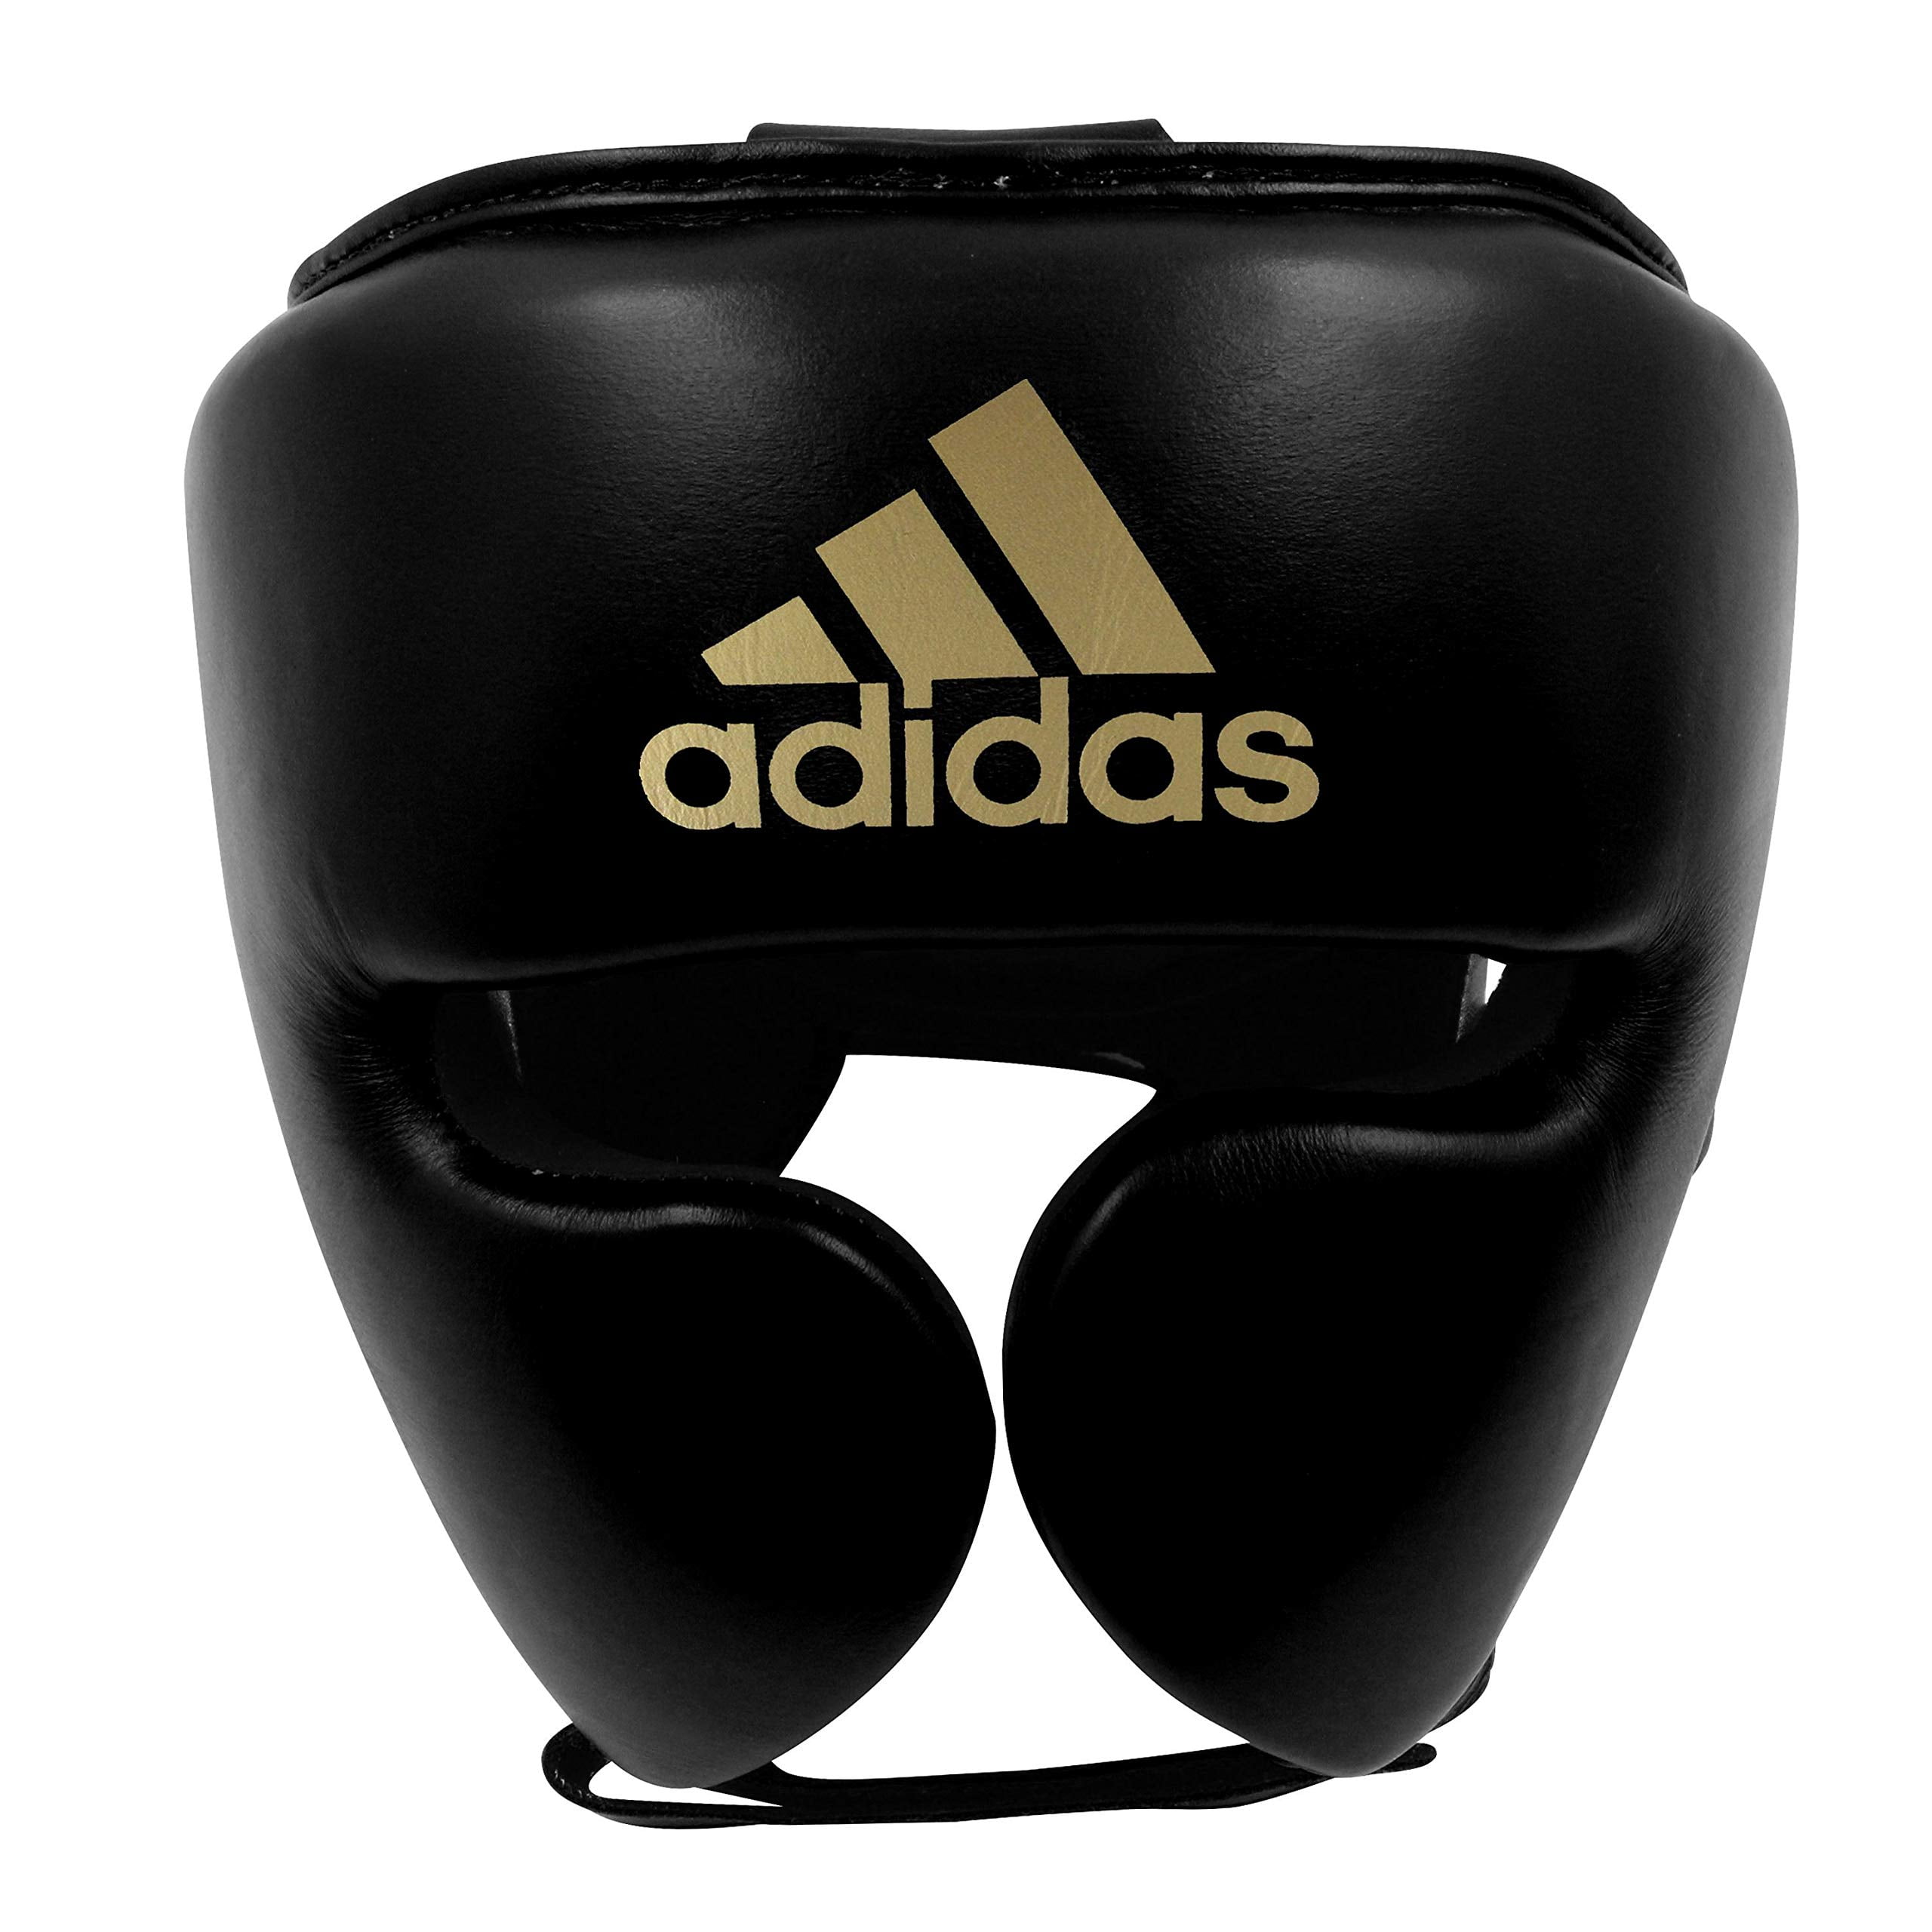 Adidas Adistar Boxing Head guard, for Men, Women, Unisex, Size Small, Color Black/Gold - Walmart.com